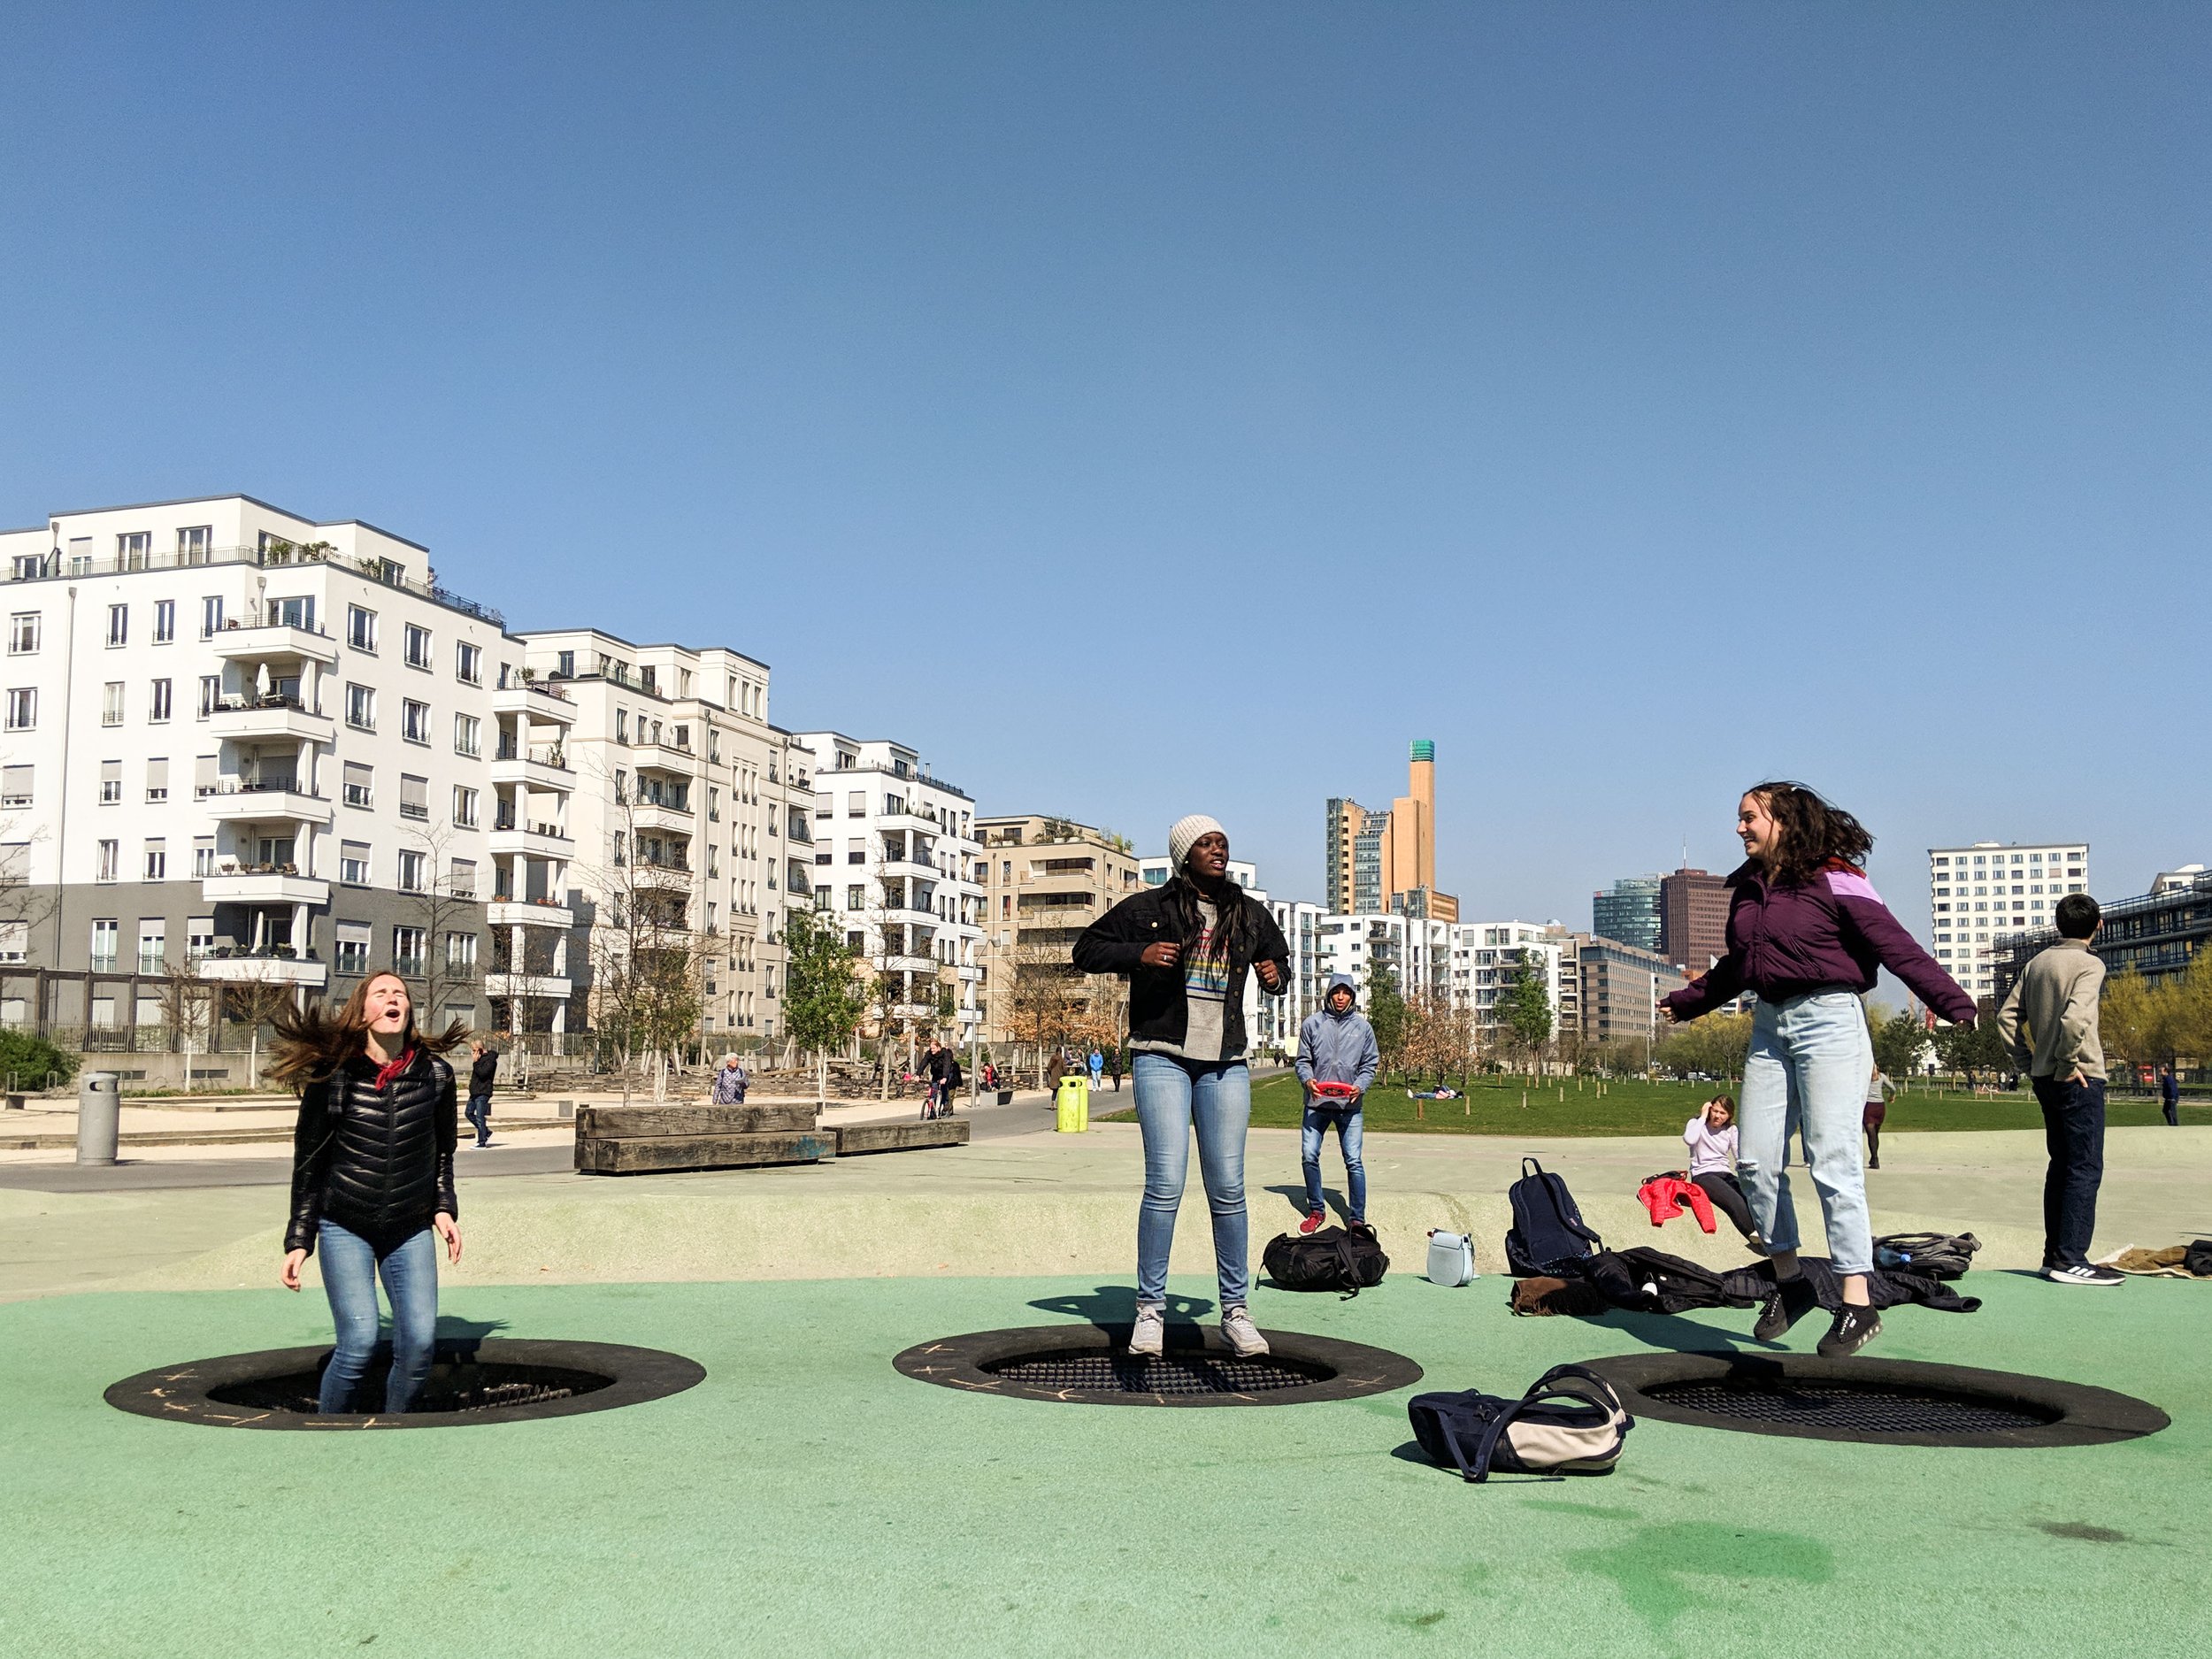 Students-on-Trampolines-Berlin-Park.jpg